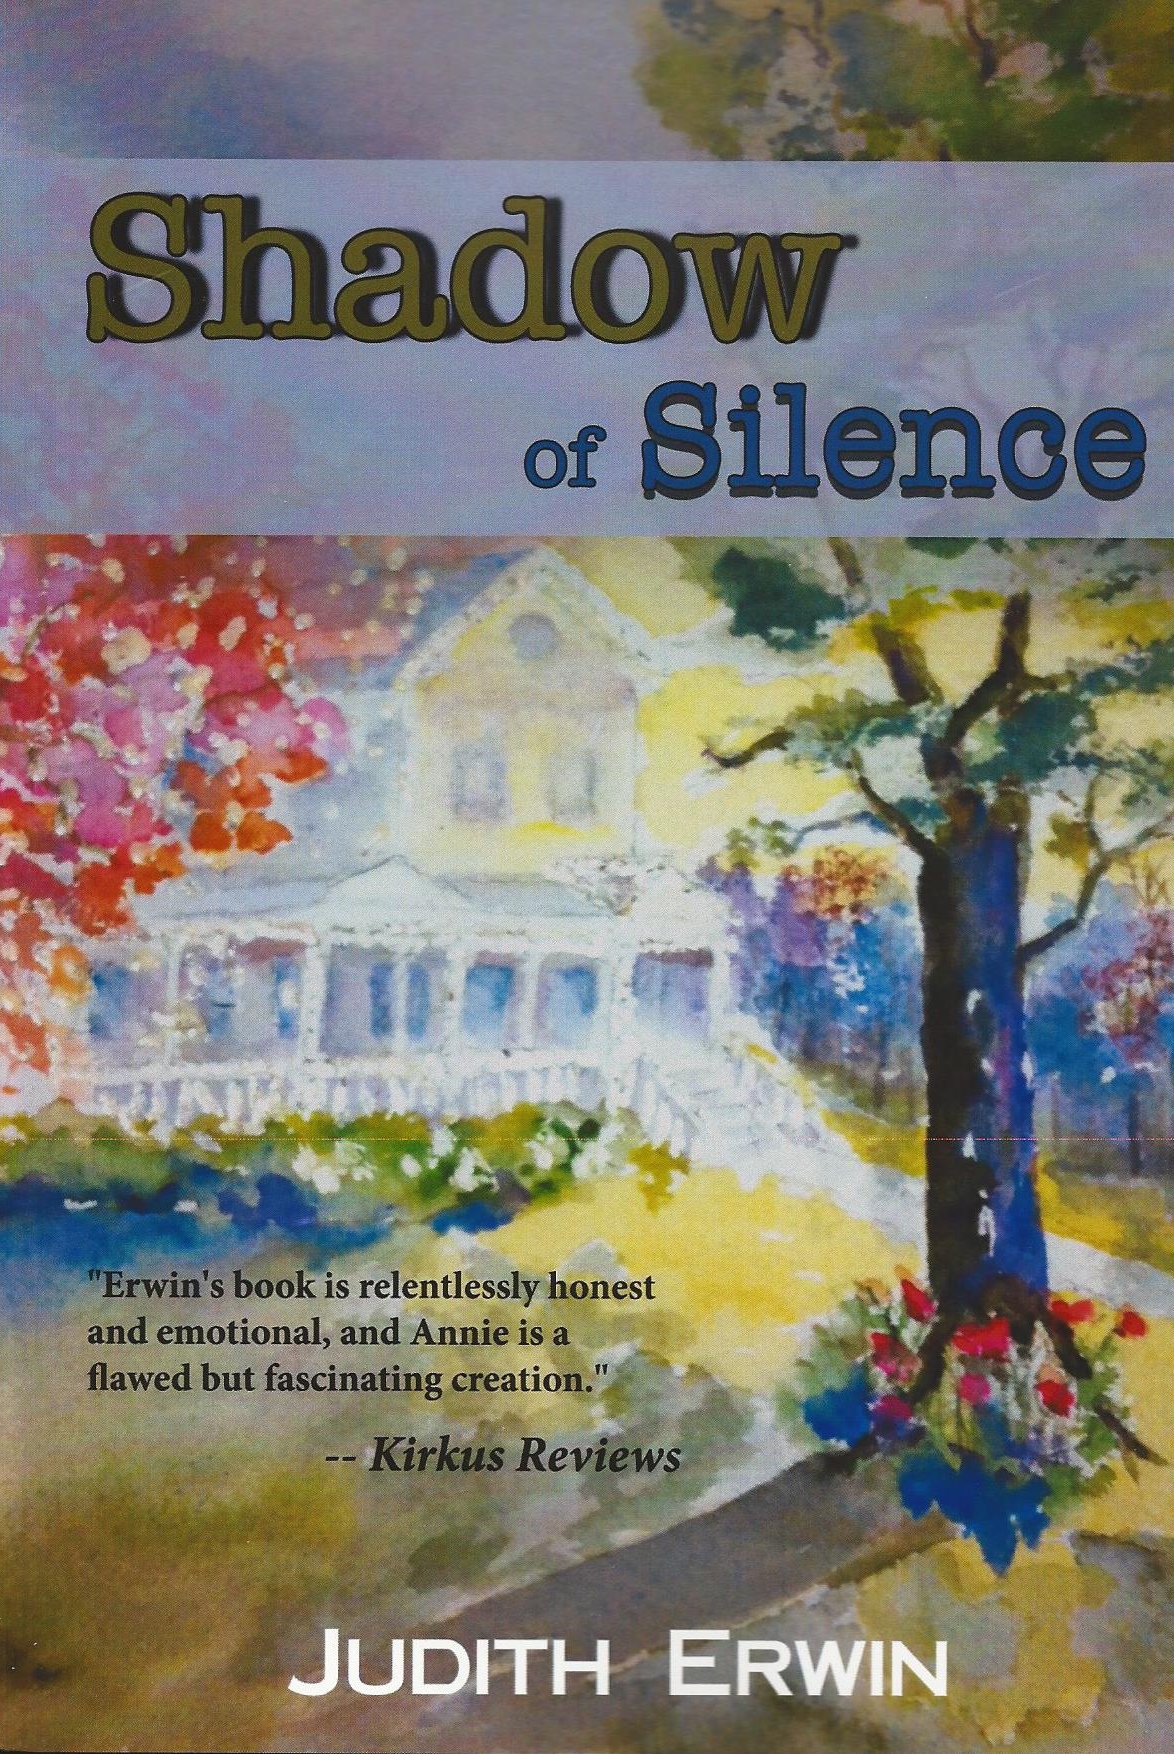 Cover art for author Judith Erwin's novel, "Shadow of Silence"